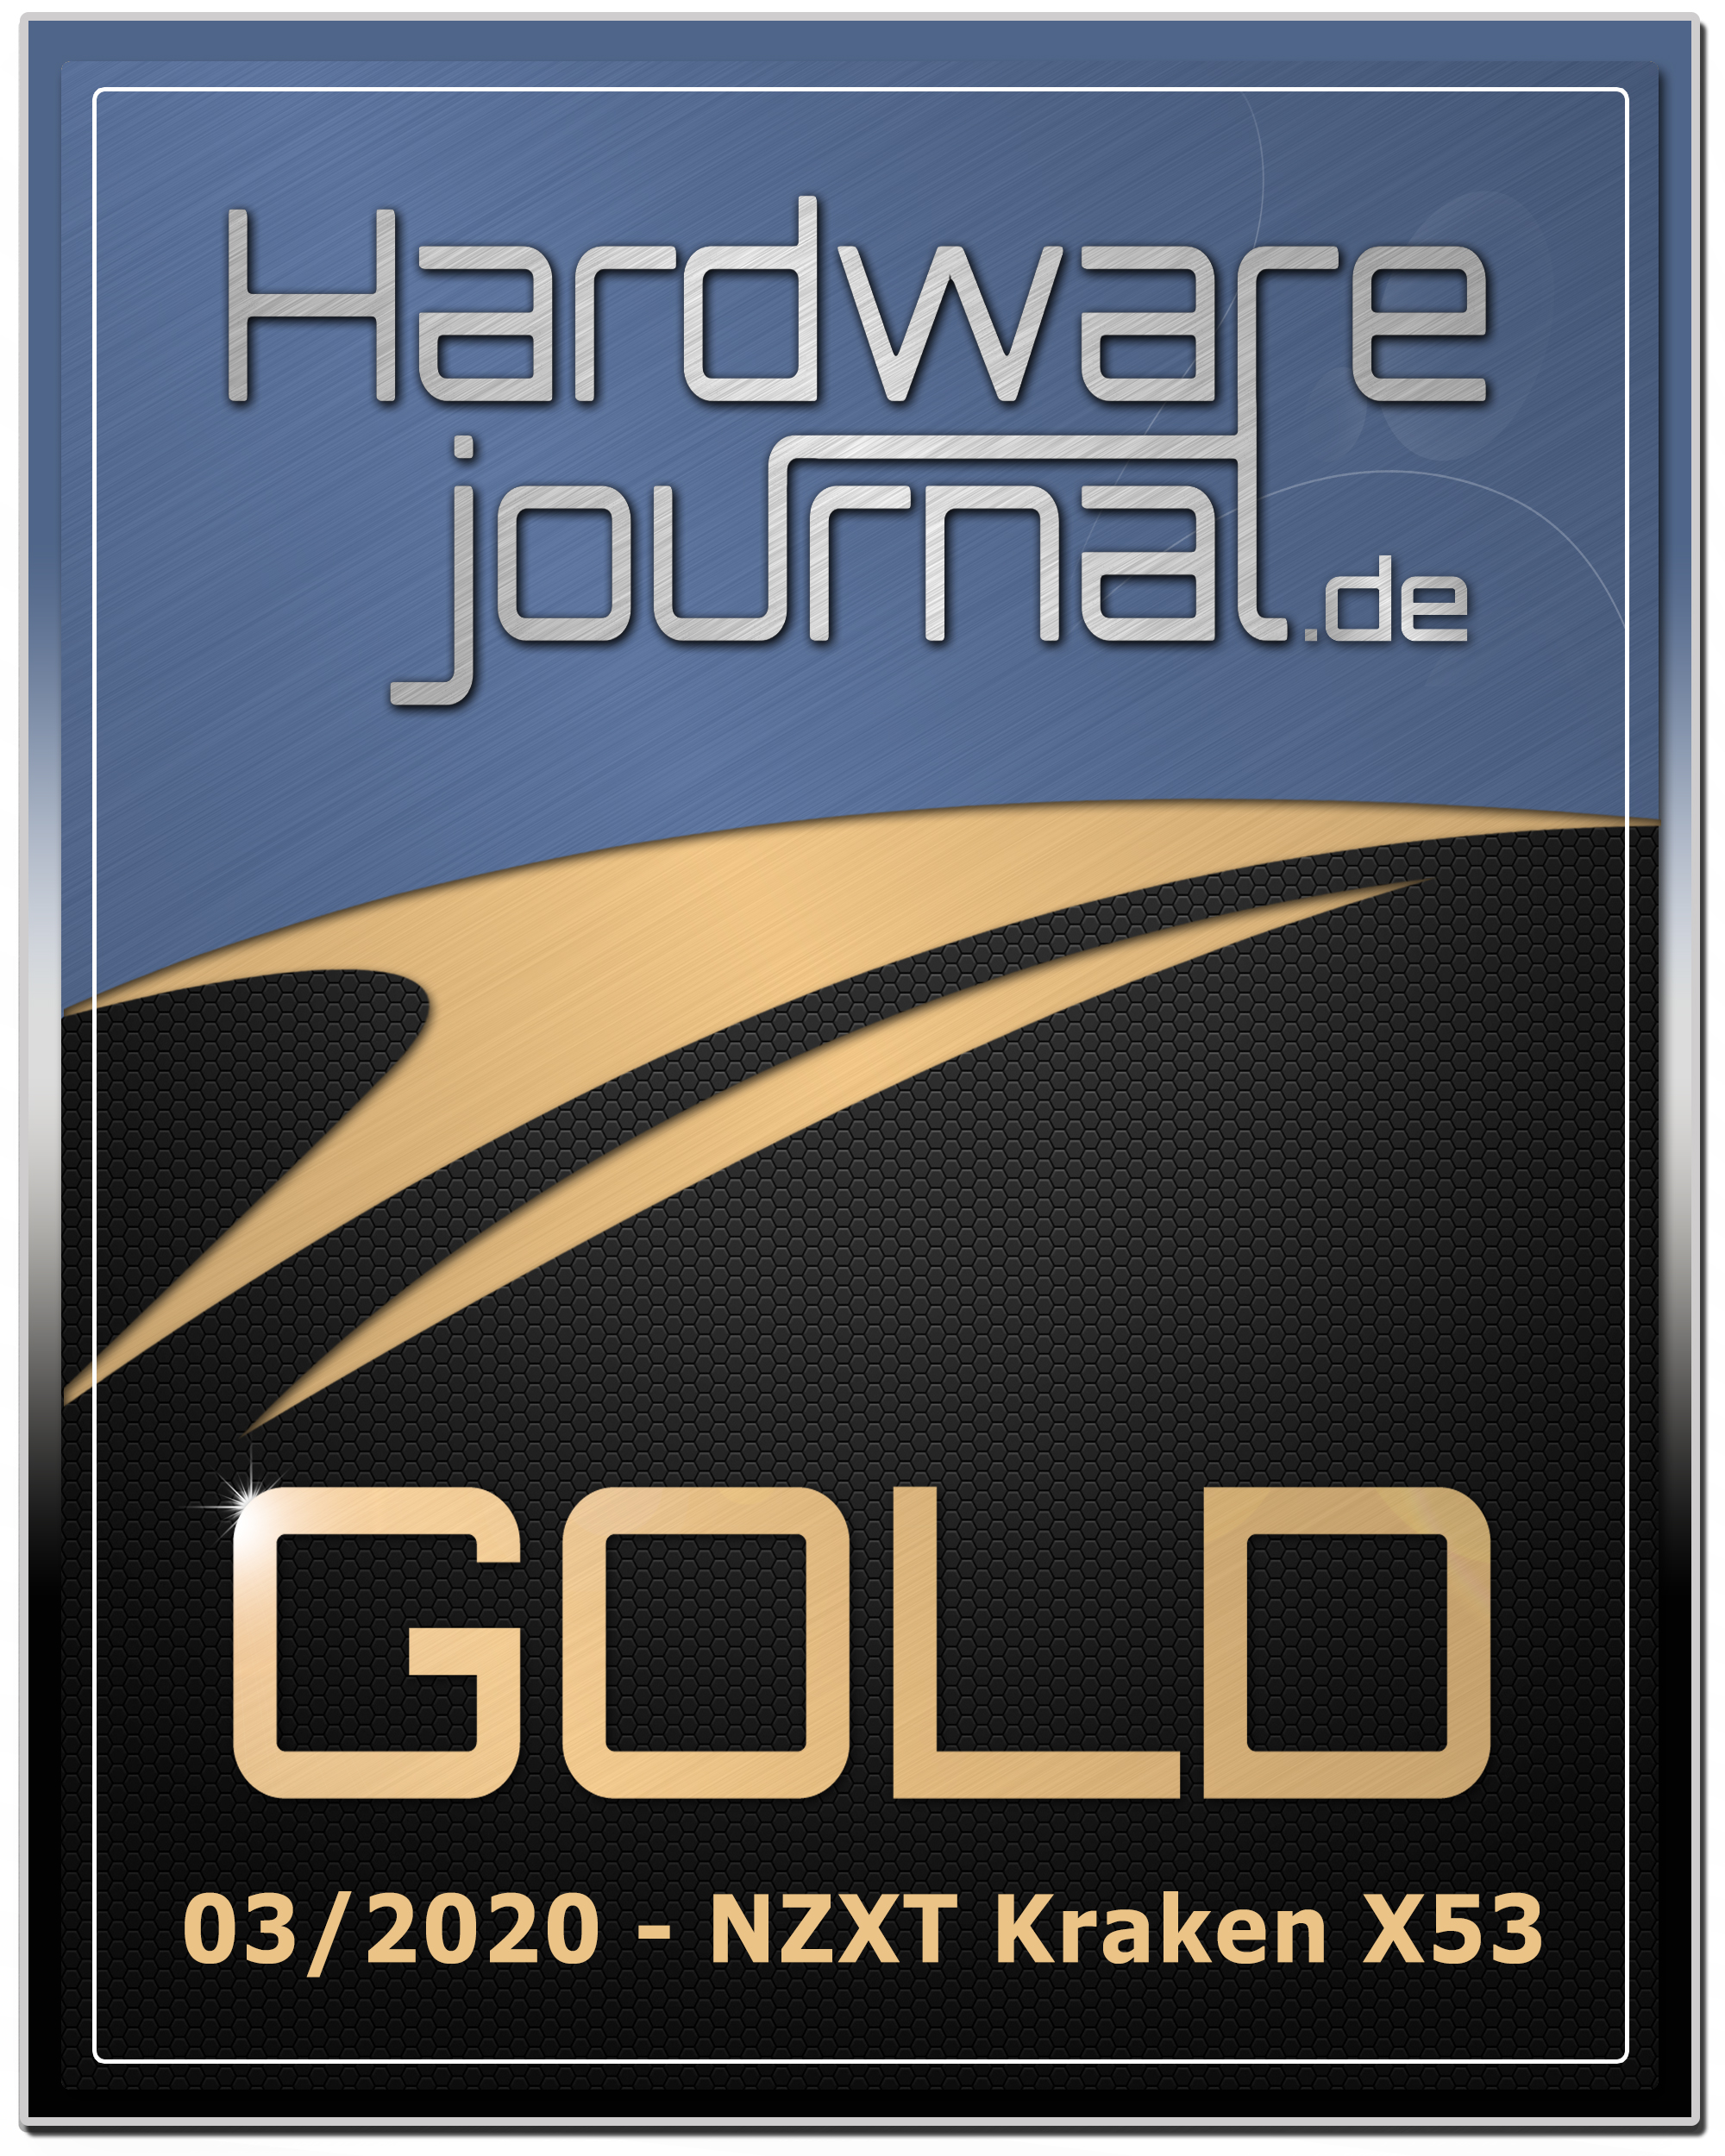 NZXT Kraken X53 Gold Award Hardware Journal